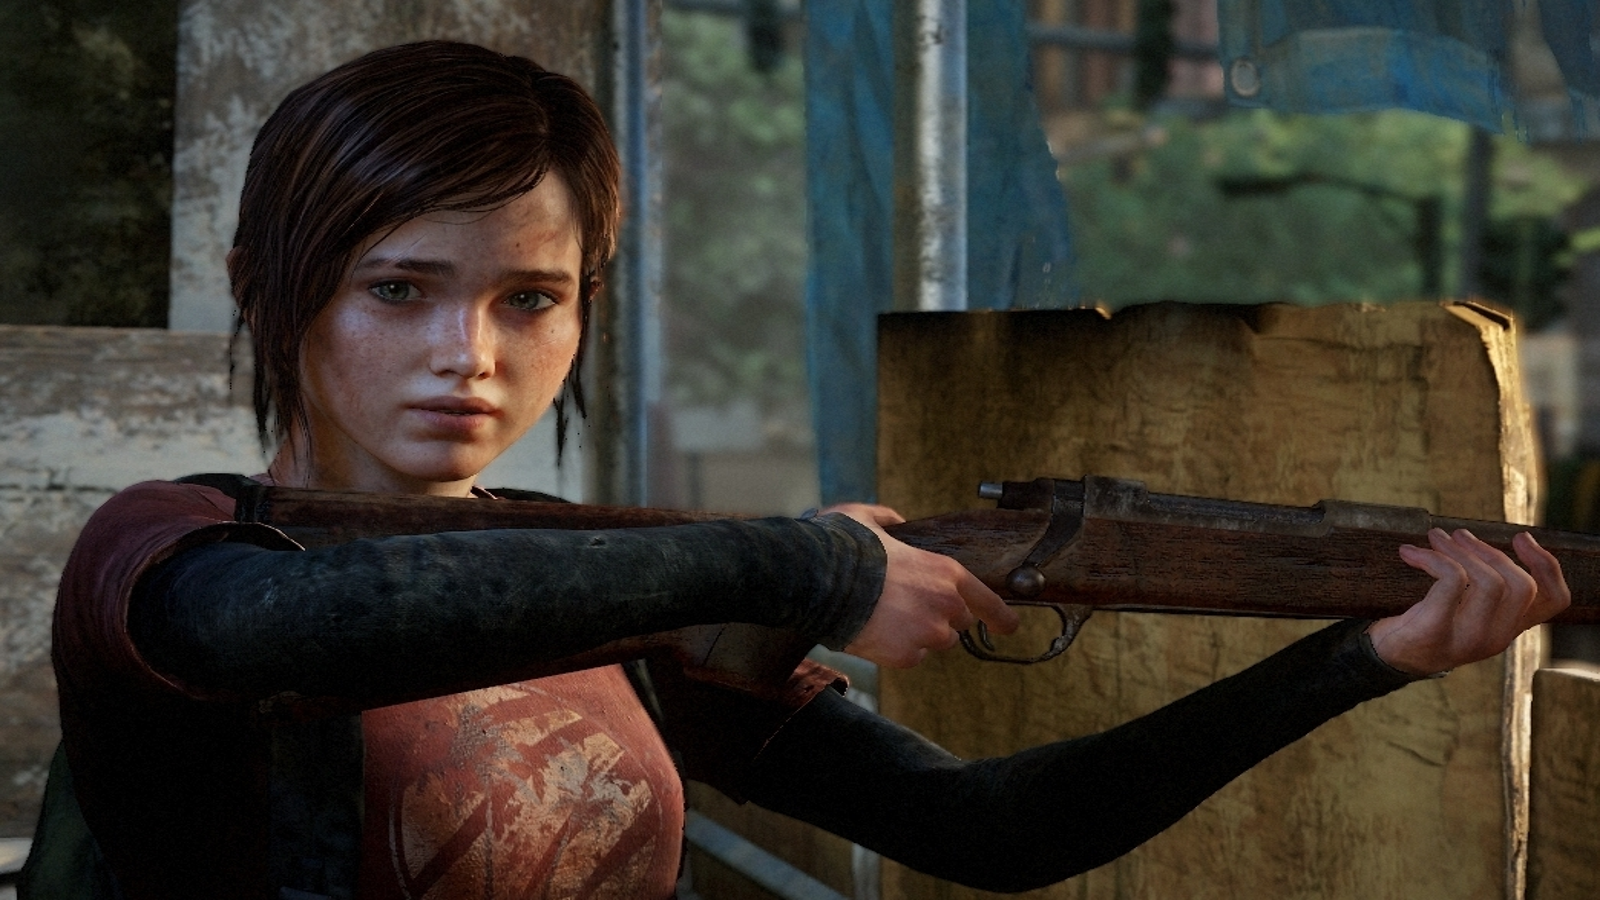 The Last of Us, PS3 vs PS4 - Original vs Remastered